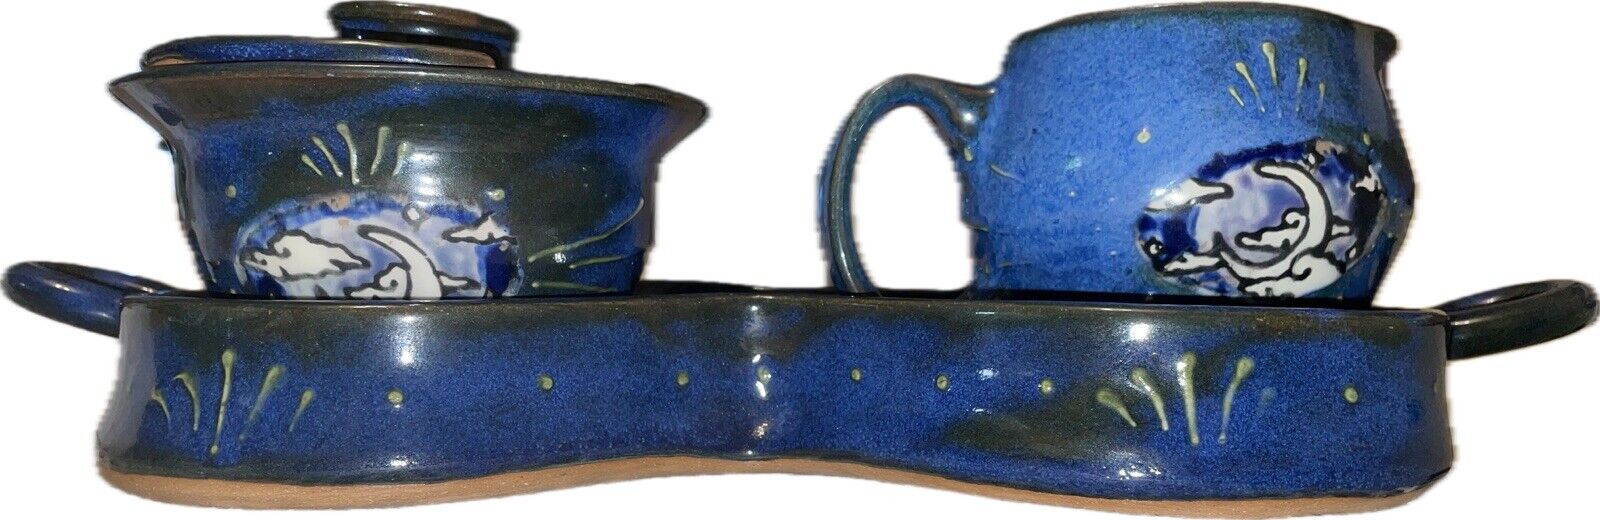 Handcrafted Glazed Pottery Sugar & Creamer Set *GORGEOUS* Moon & Stars Illus.